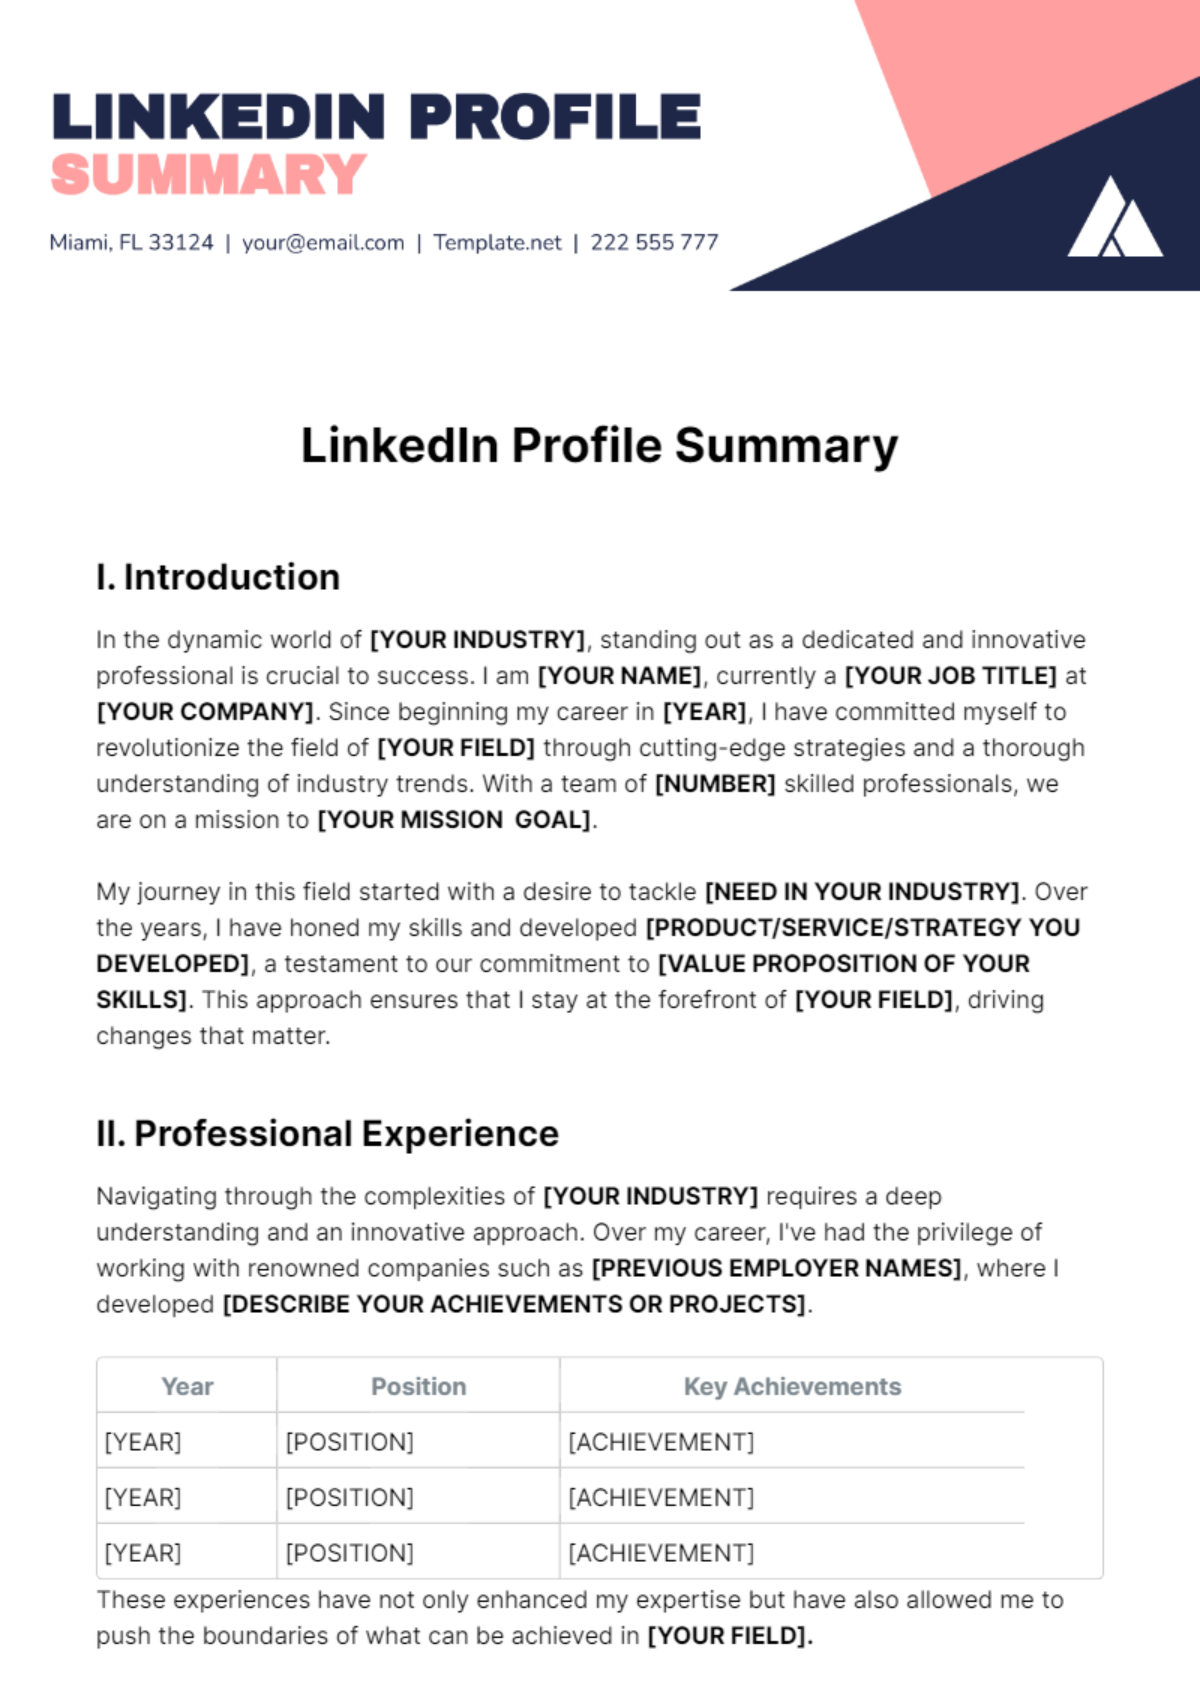 LinkedIn Profile Summary Template